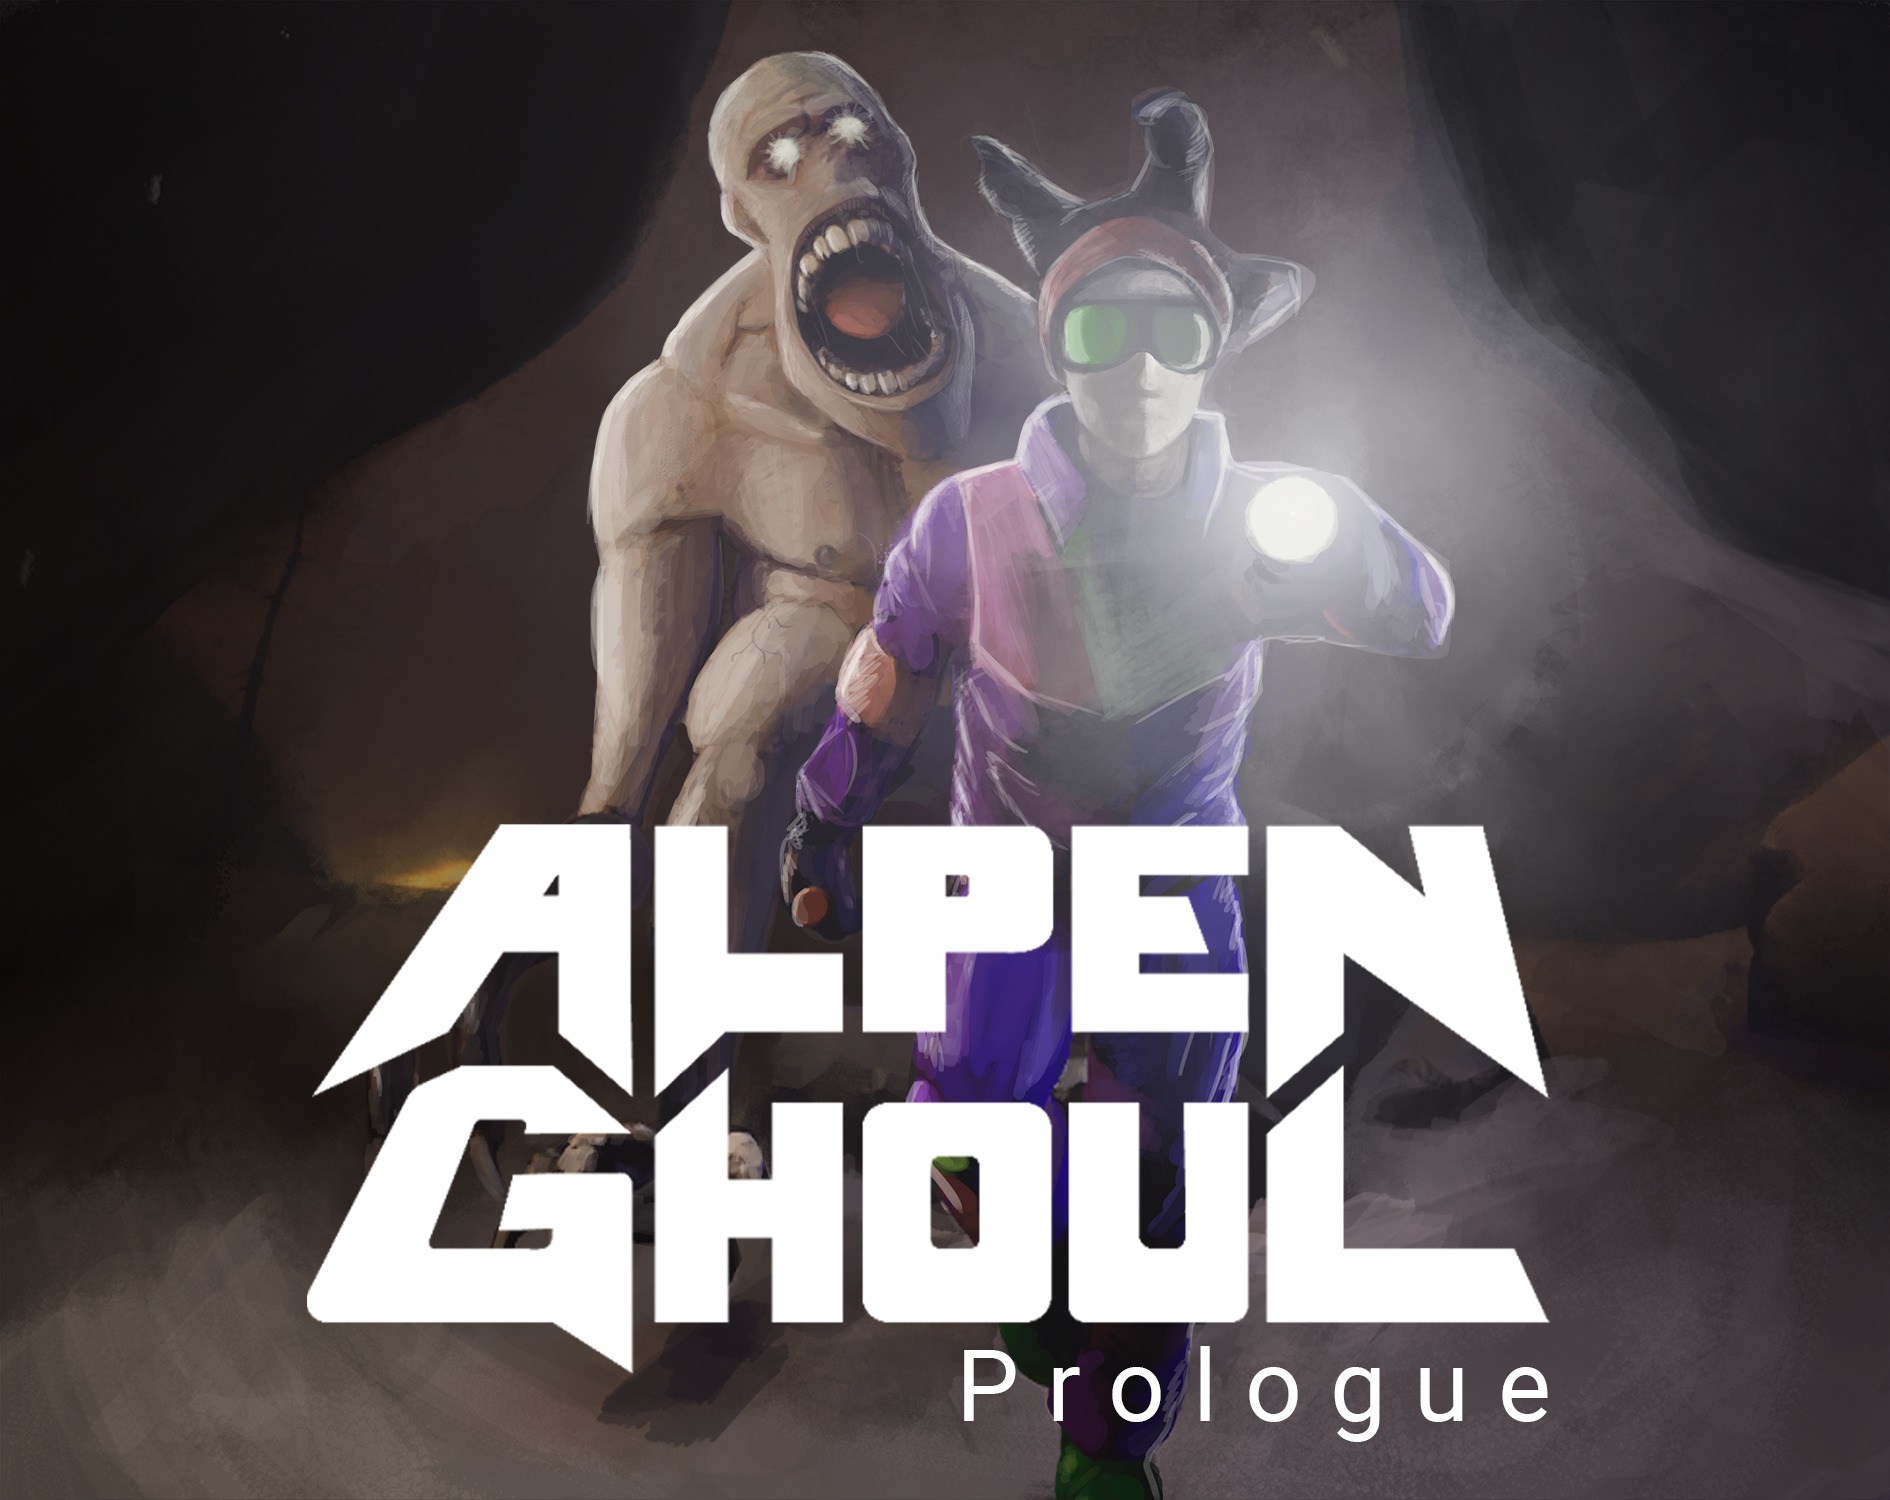 Alpen Ghoul: Prologue